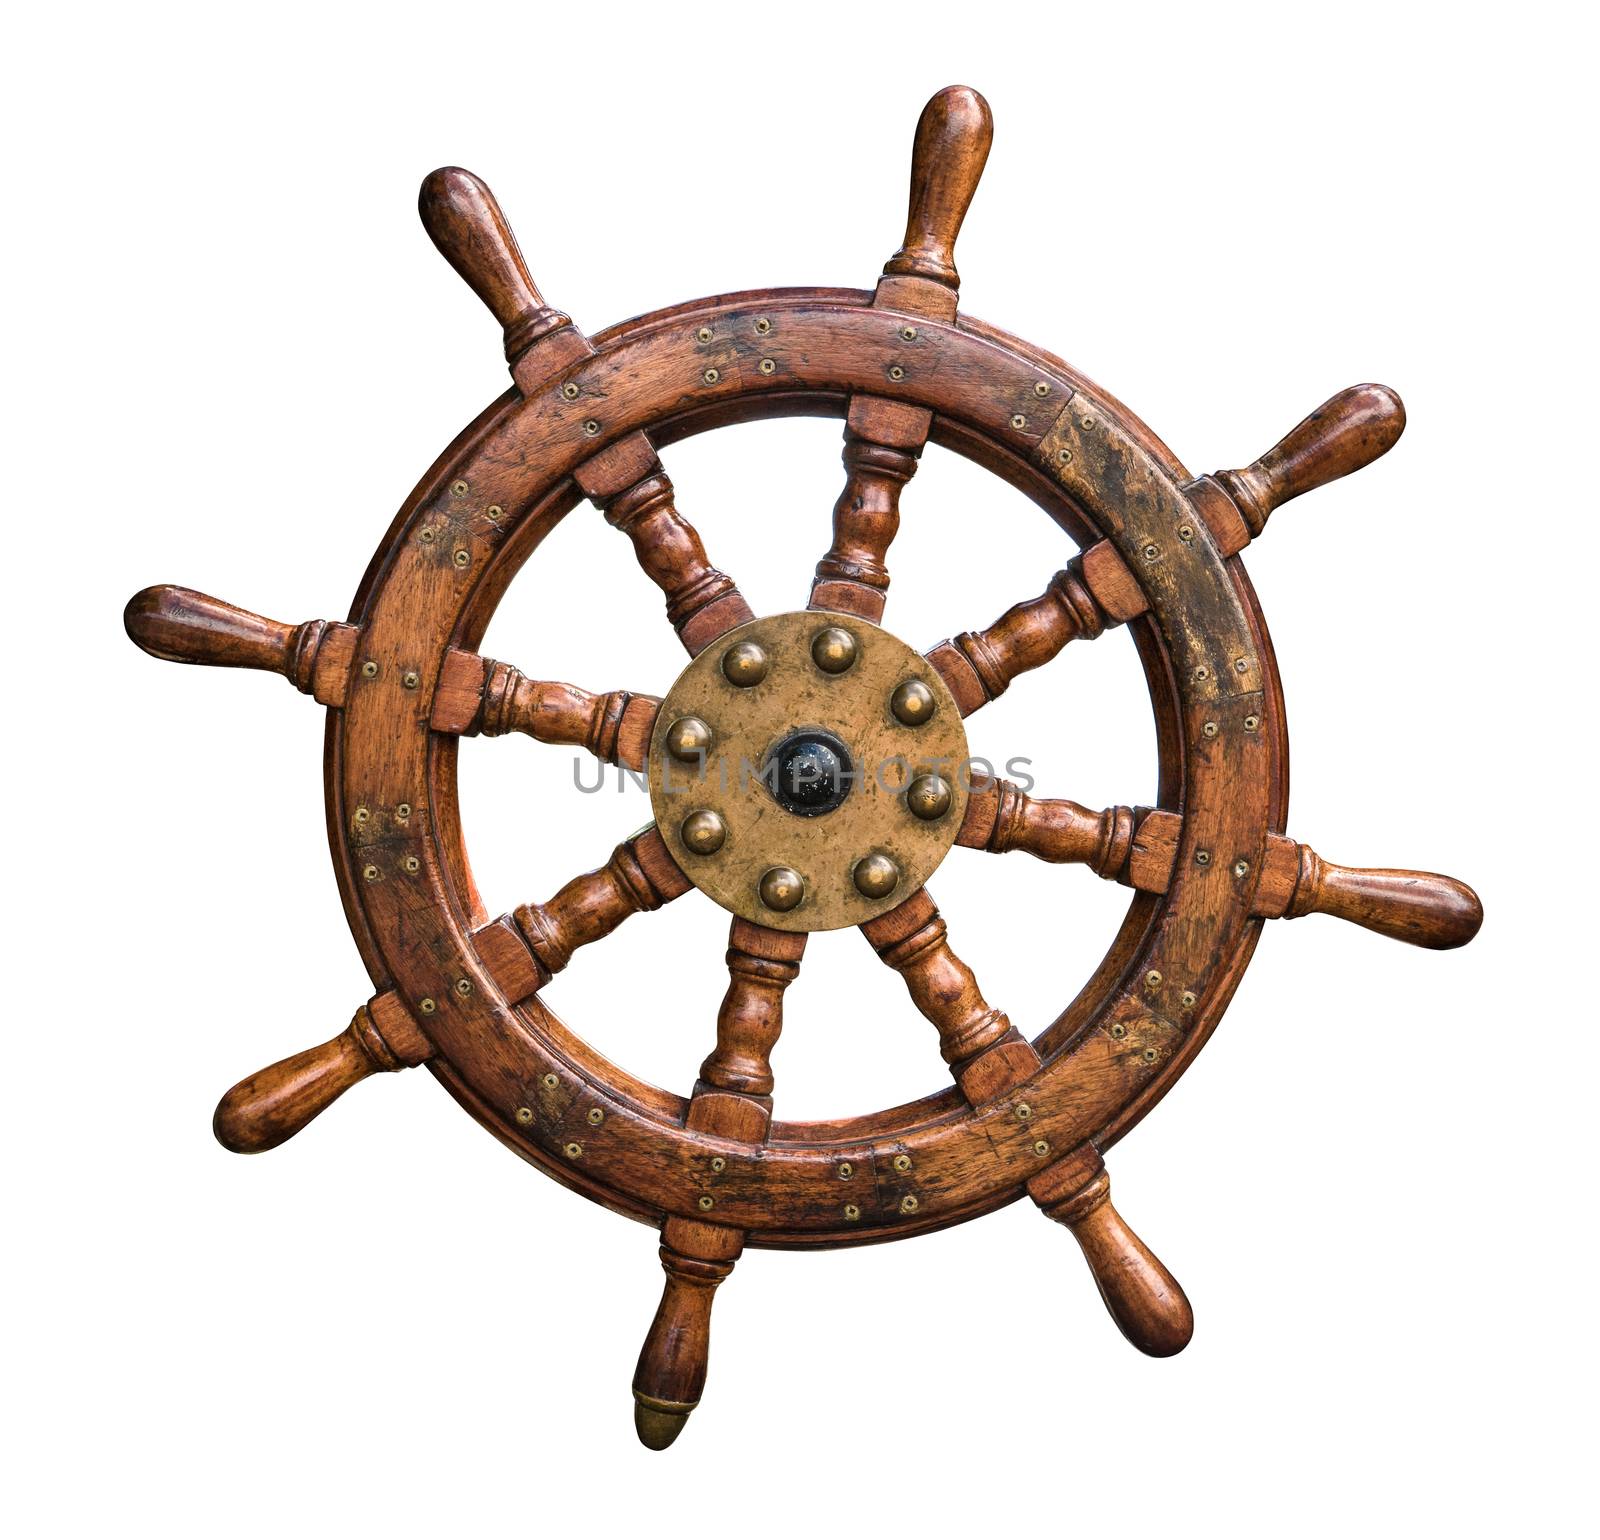 Isolated Ships Wheel by mrdoomits